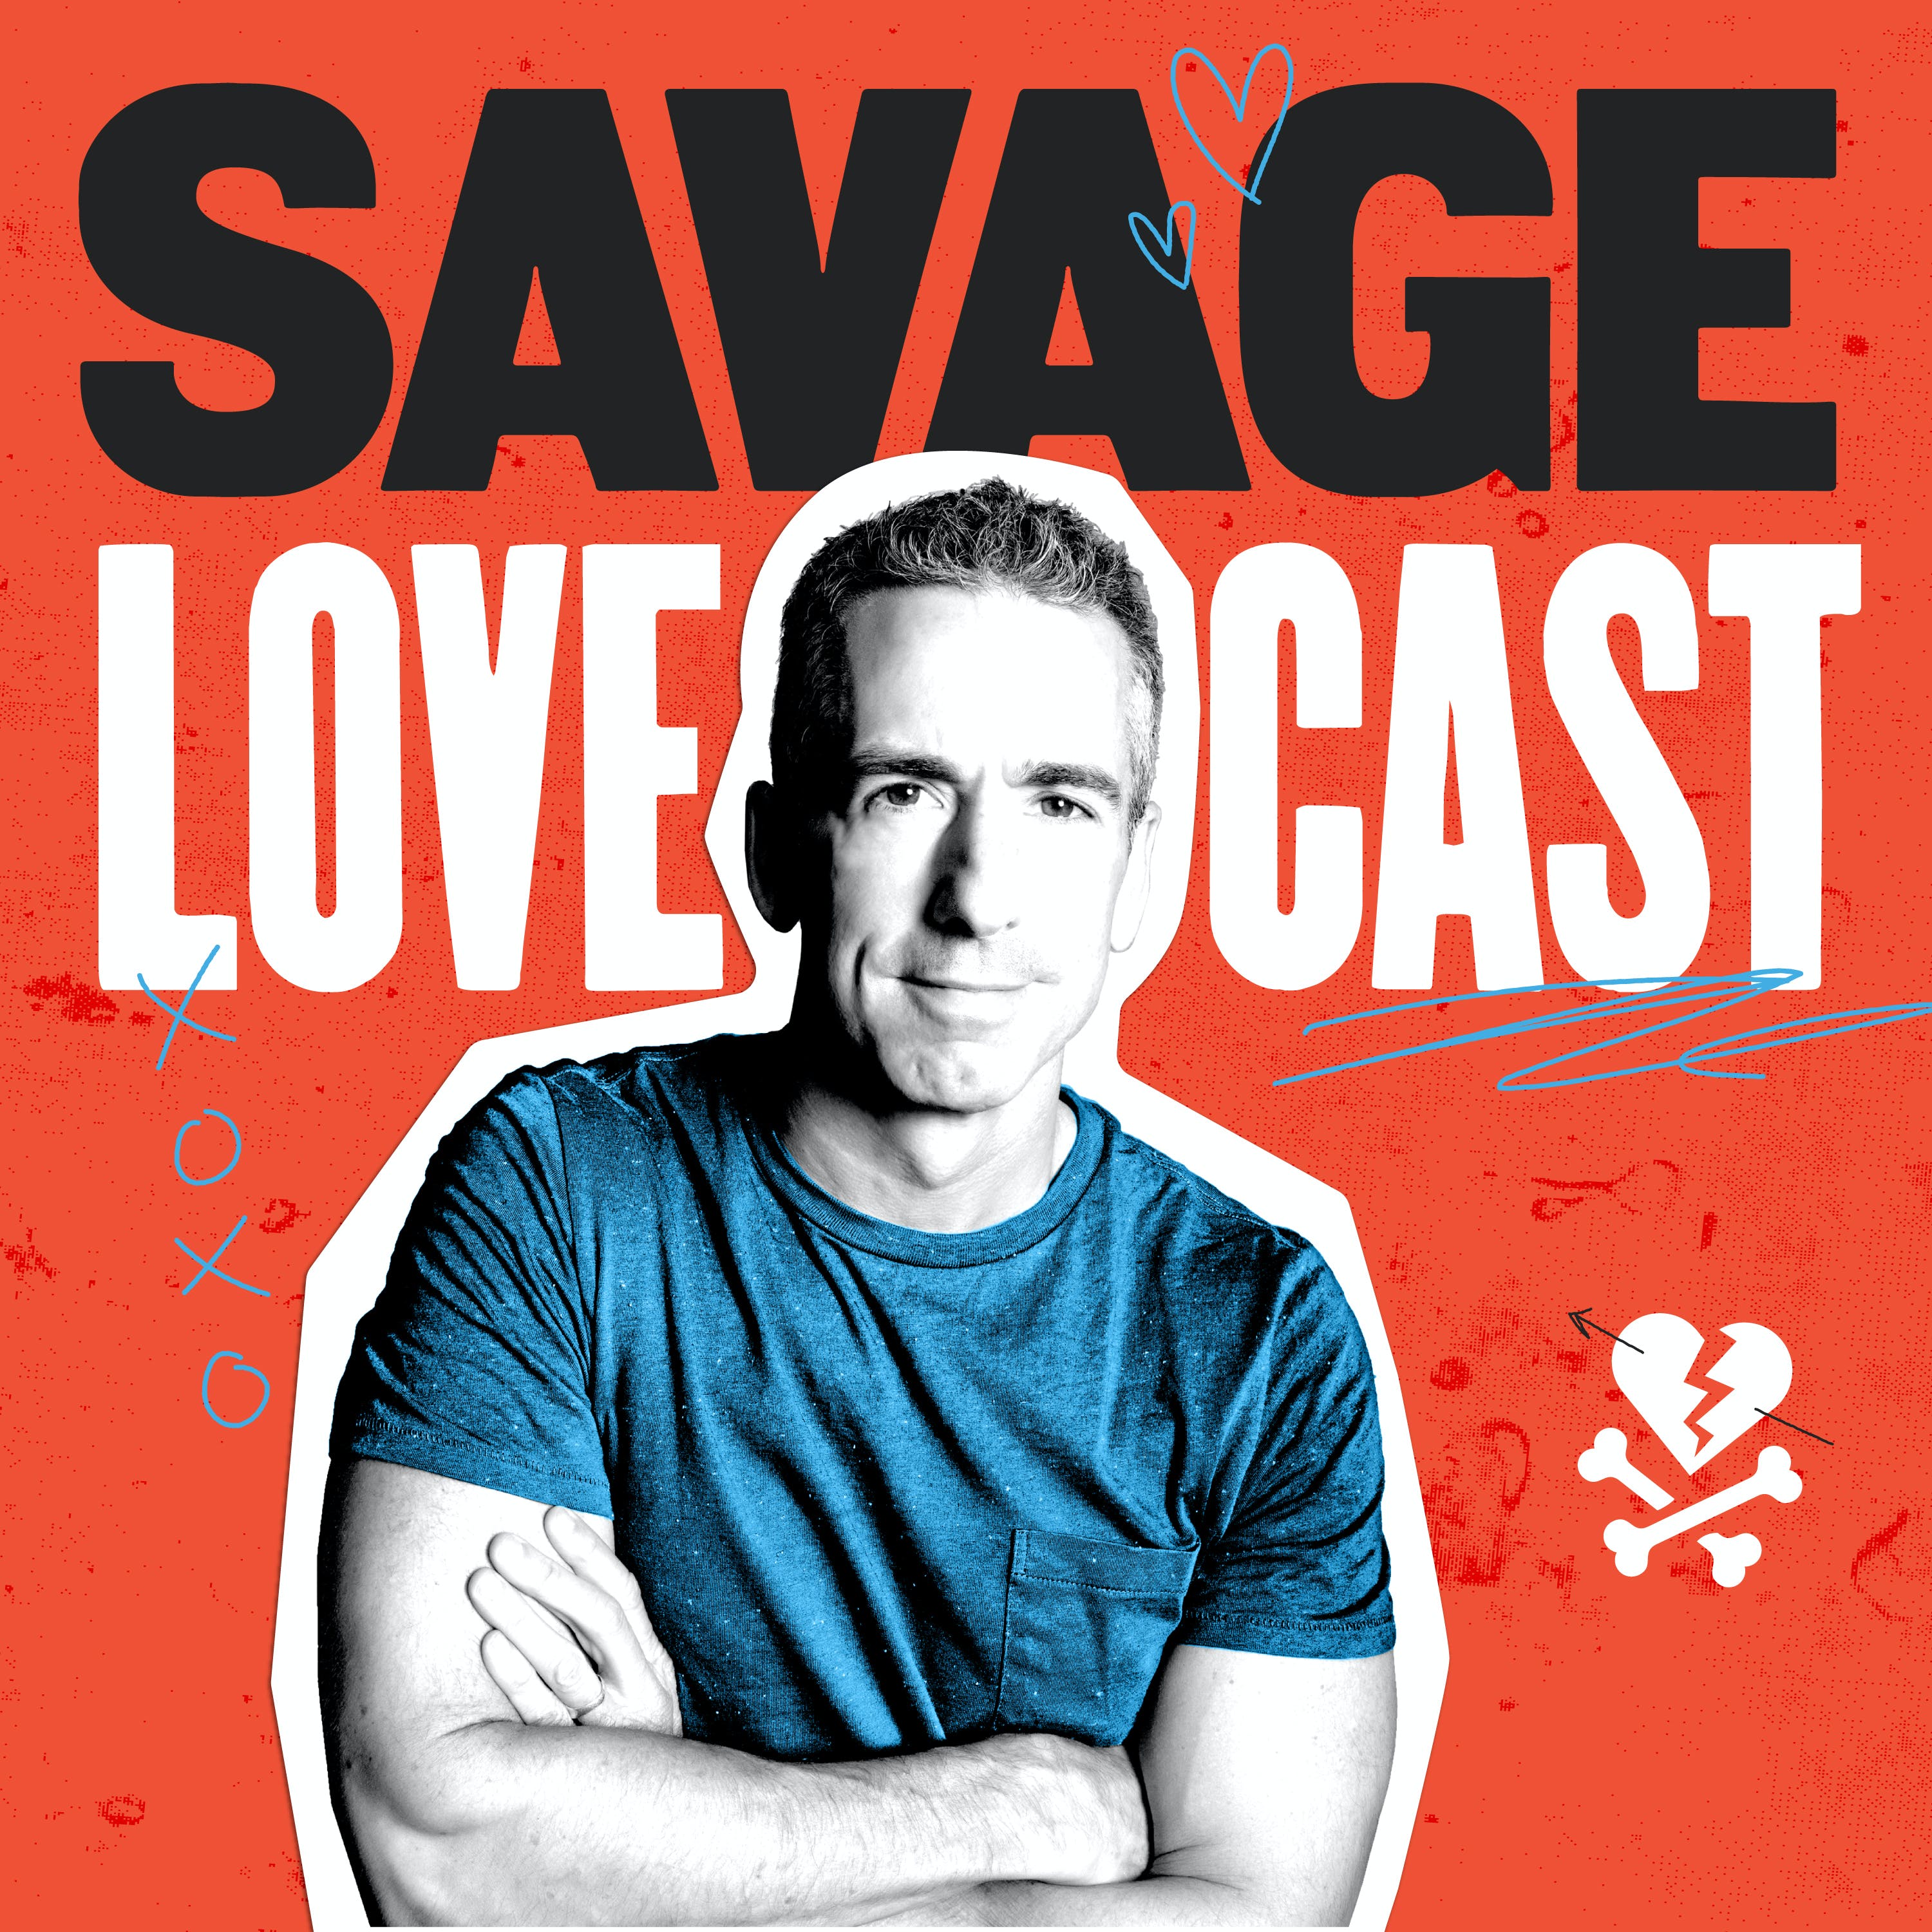 Savage Lovecast Listen here Podplay photo